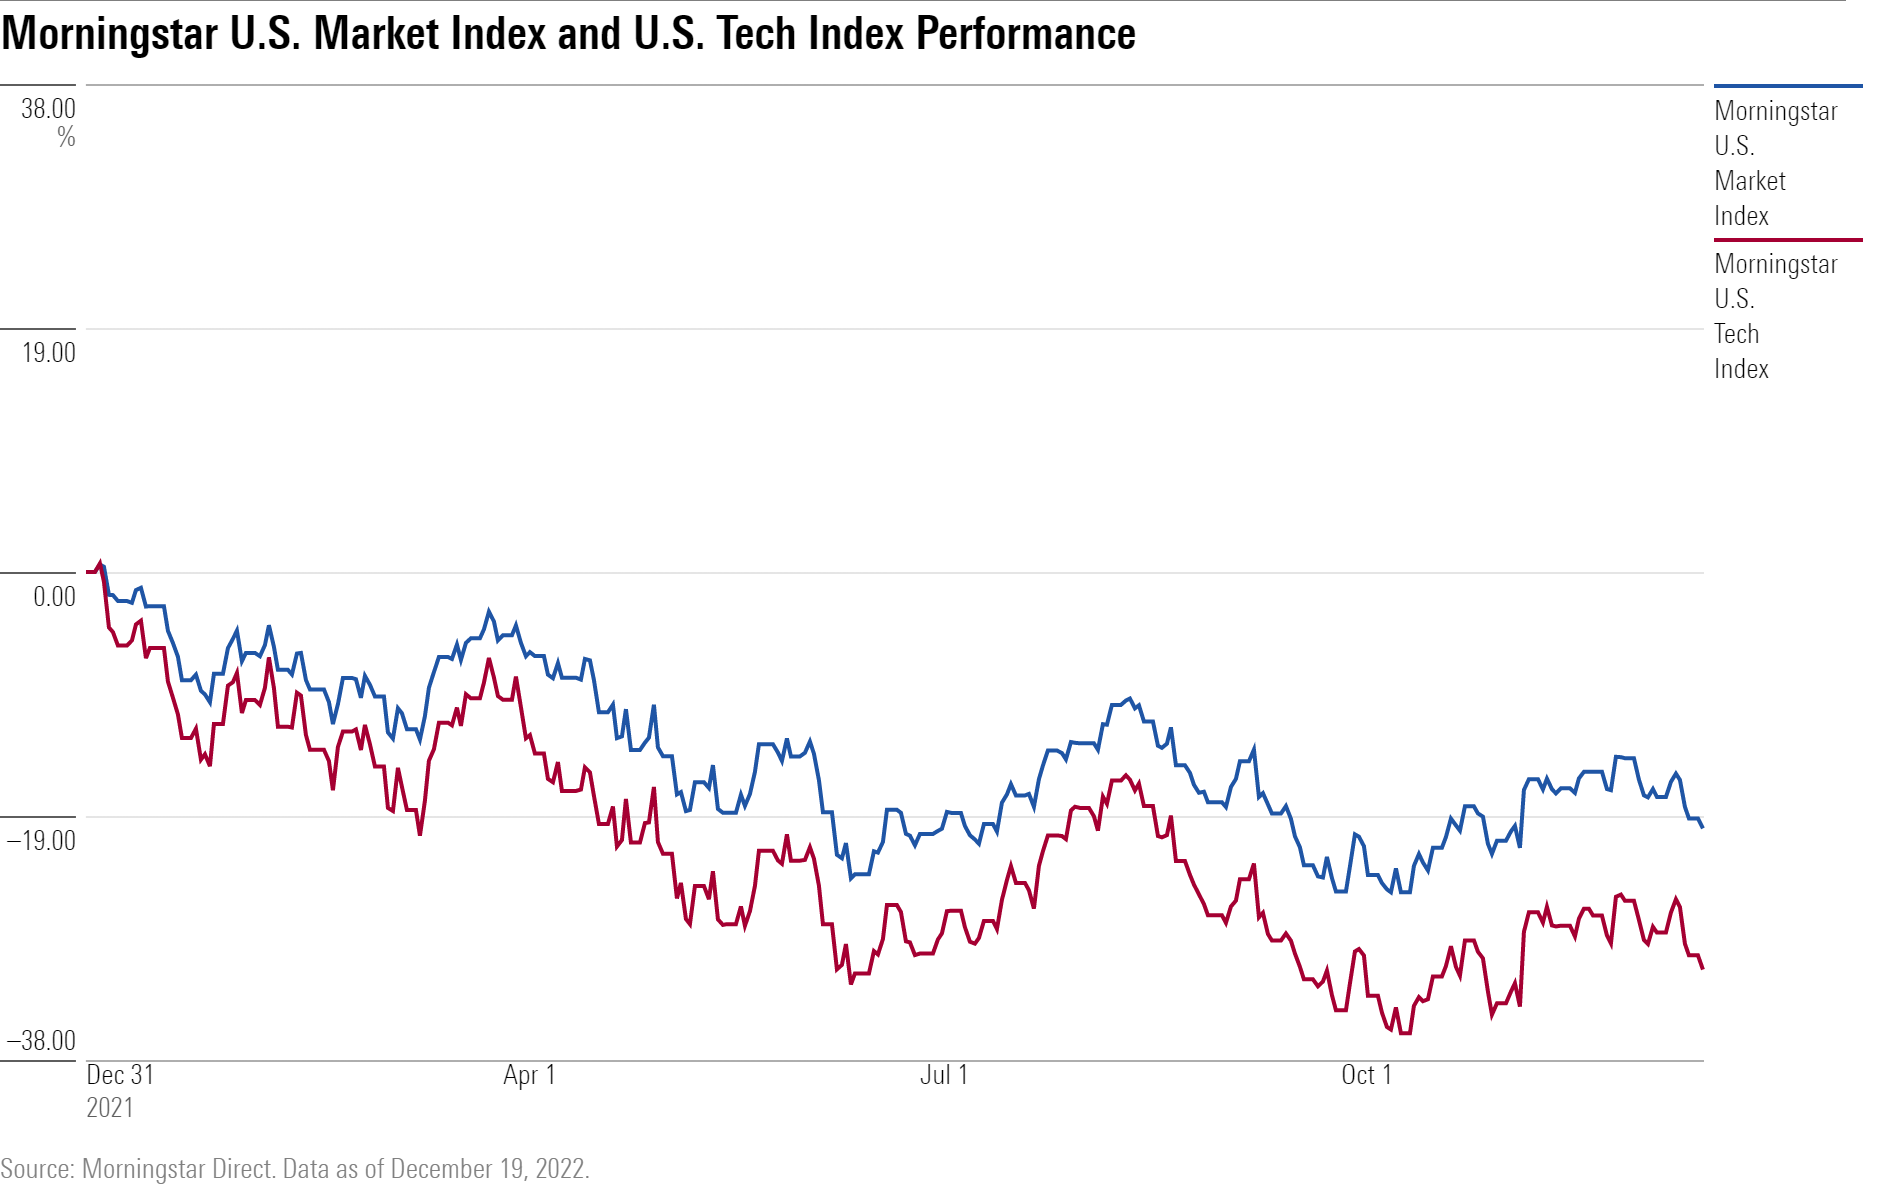 Morningstar U.S. Market Index and U.S. Tech Index Performance